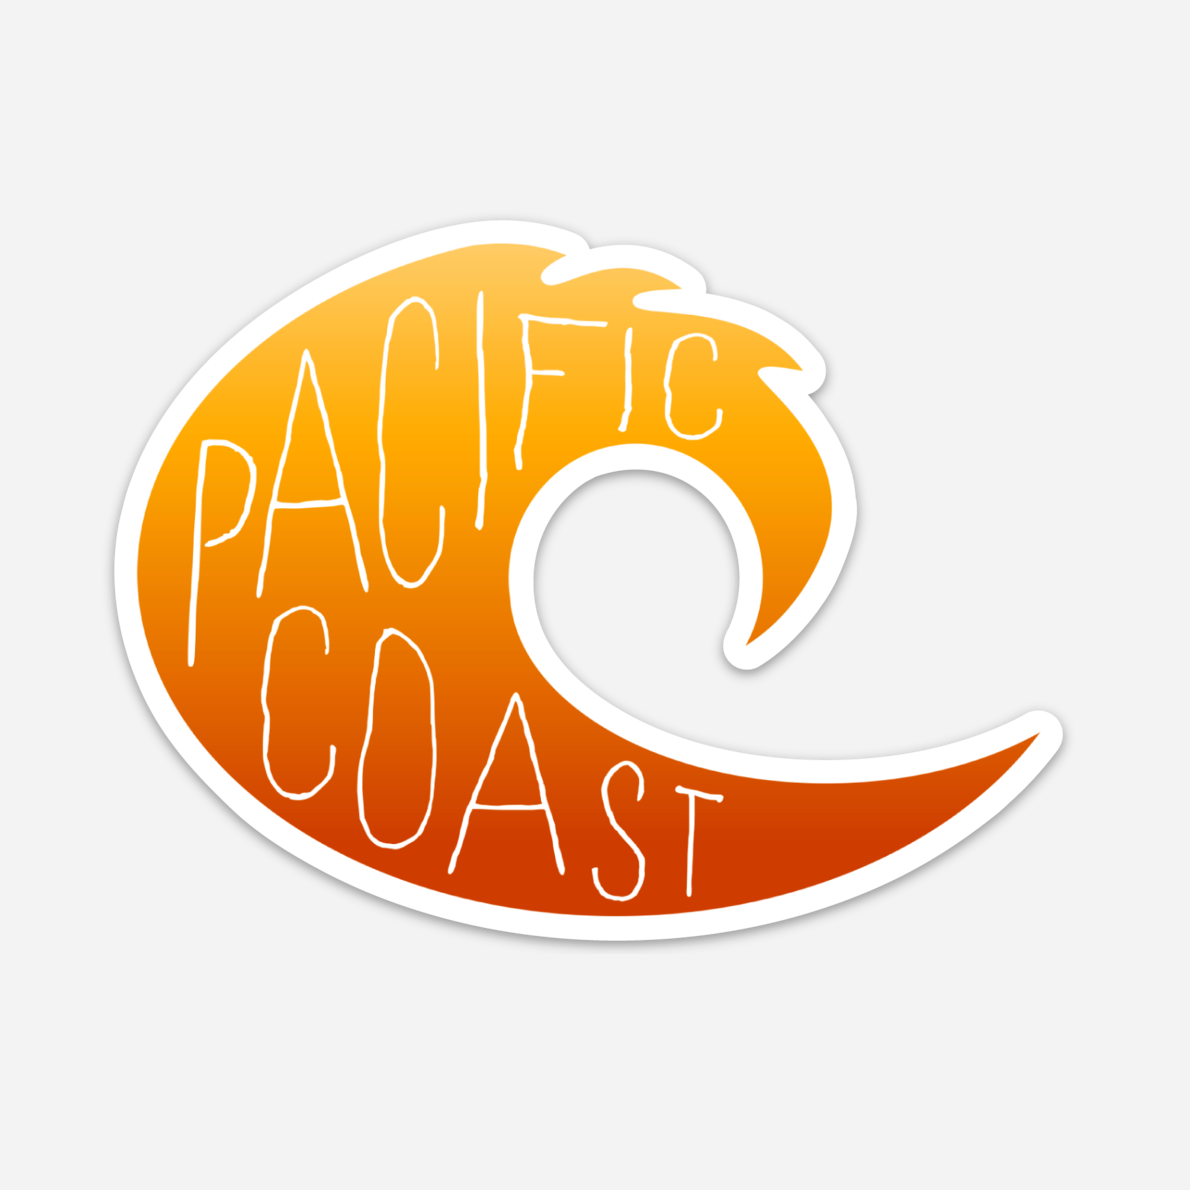 Pacific Coast Wave